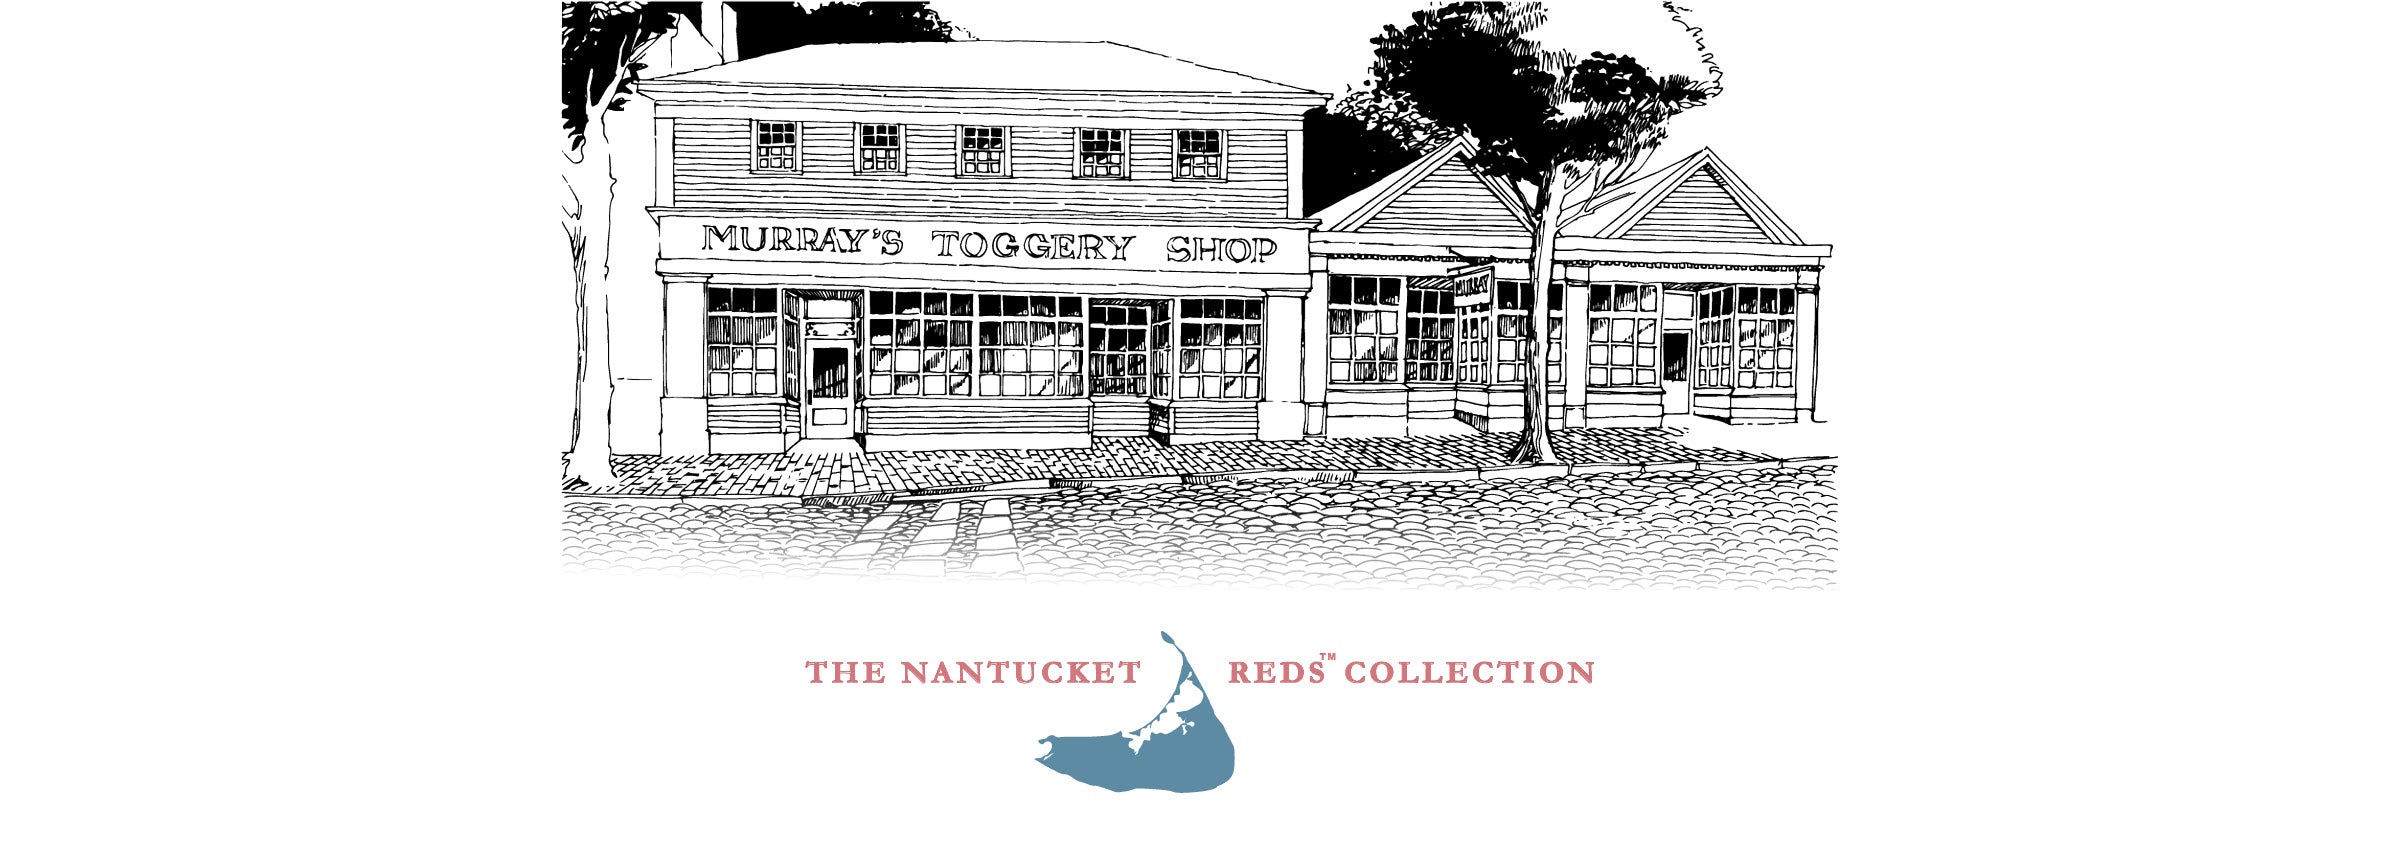 Murray's Toggery Shop, Nantucket Reds